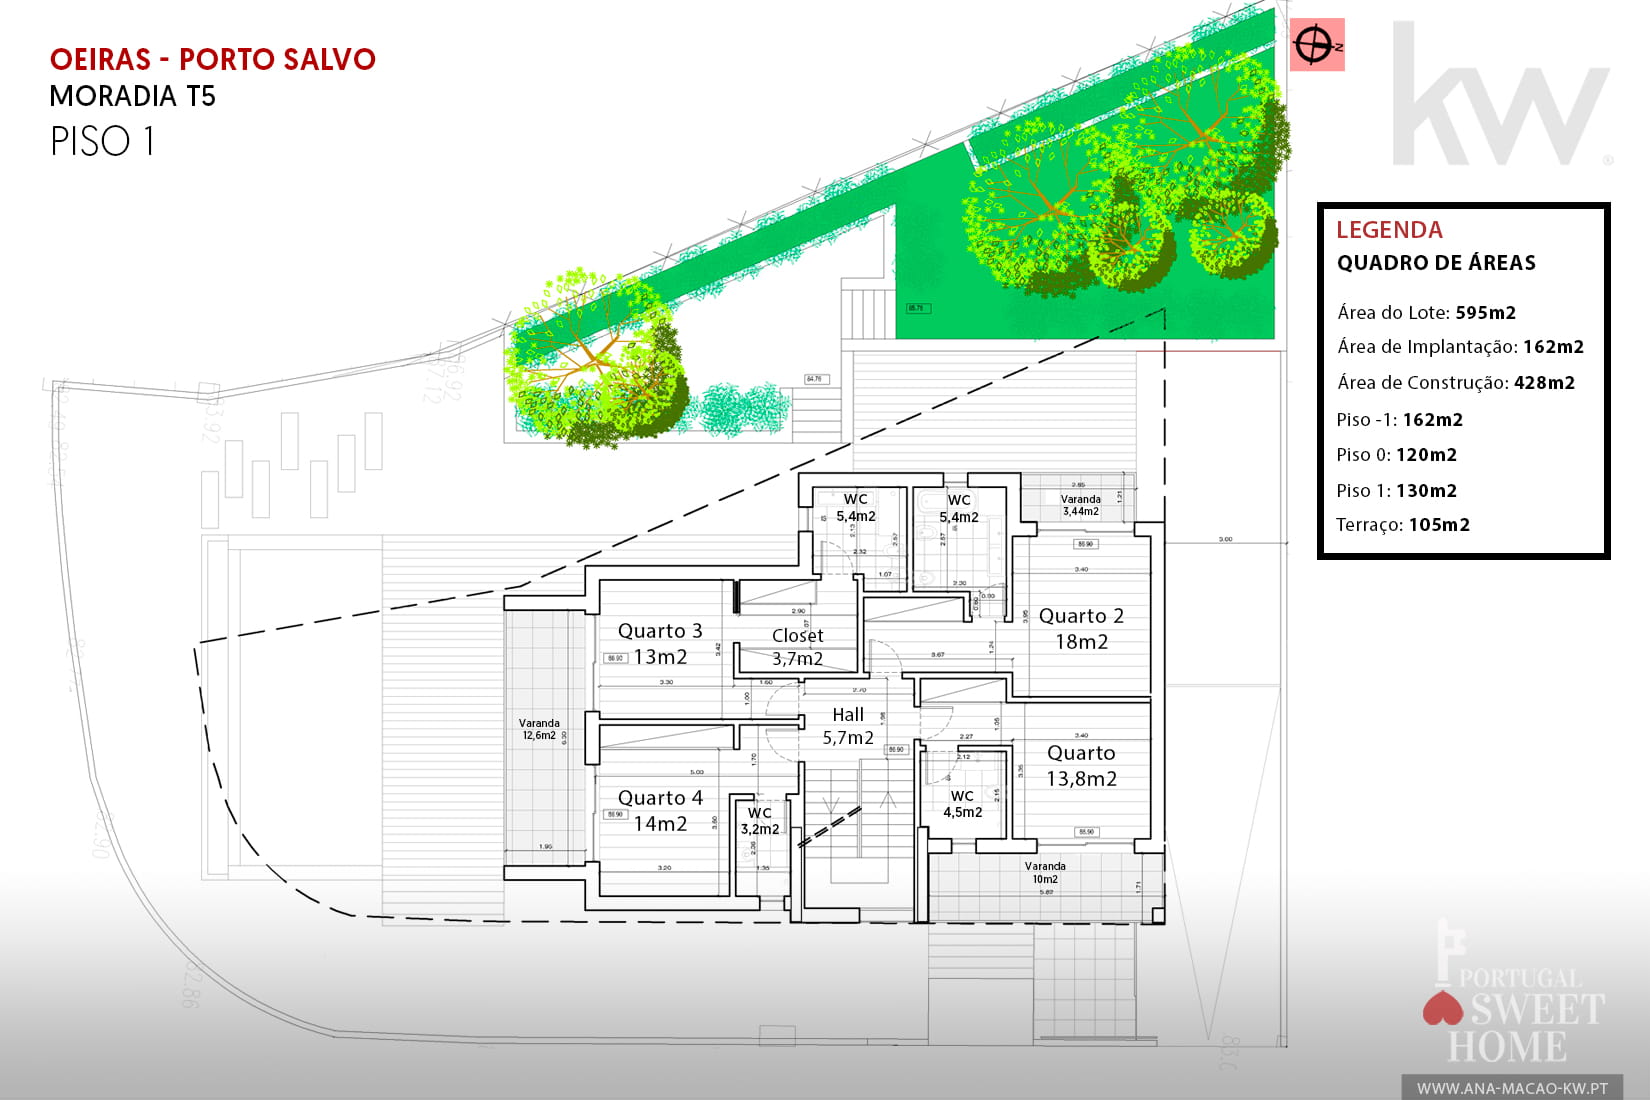 Plan of the 1st floor (130m2)